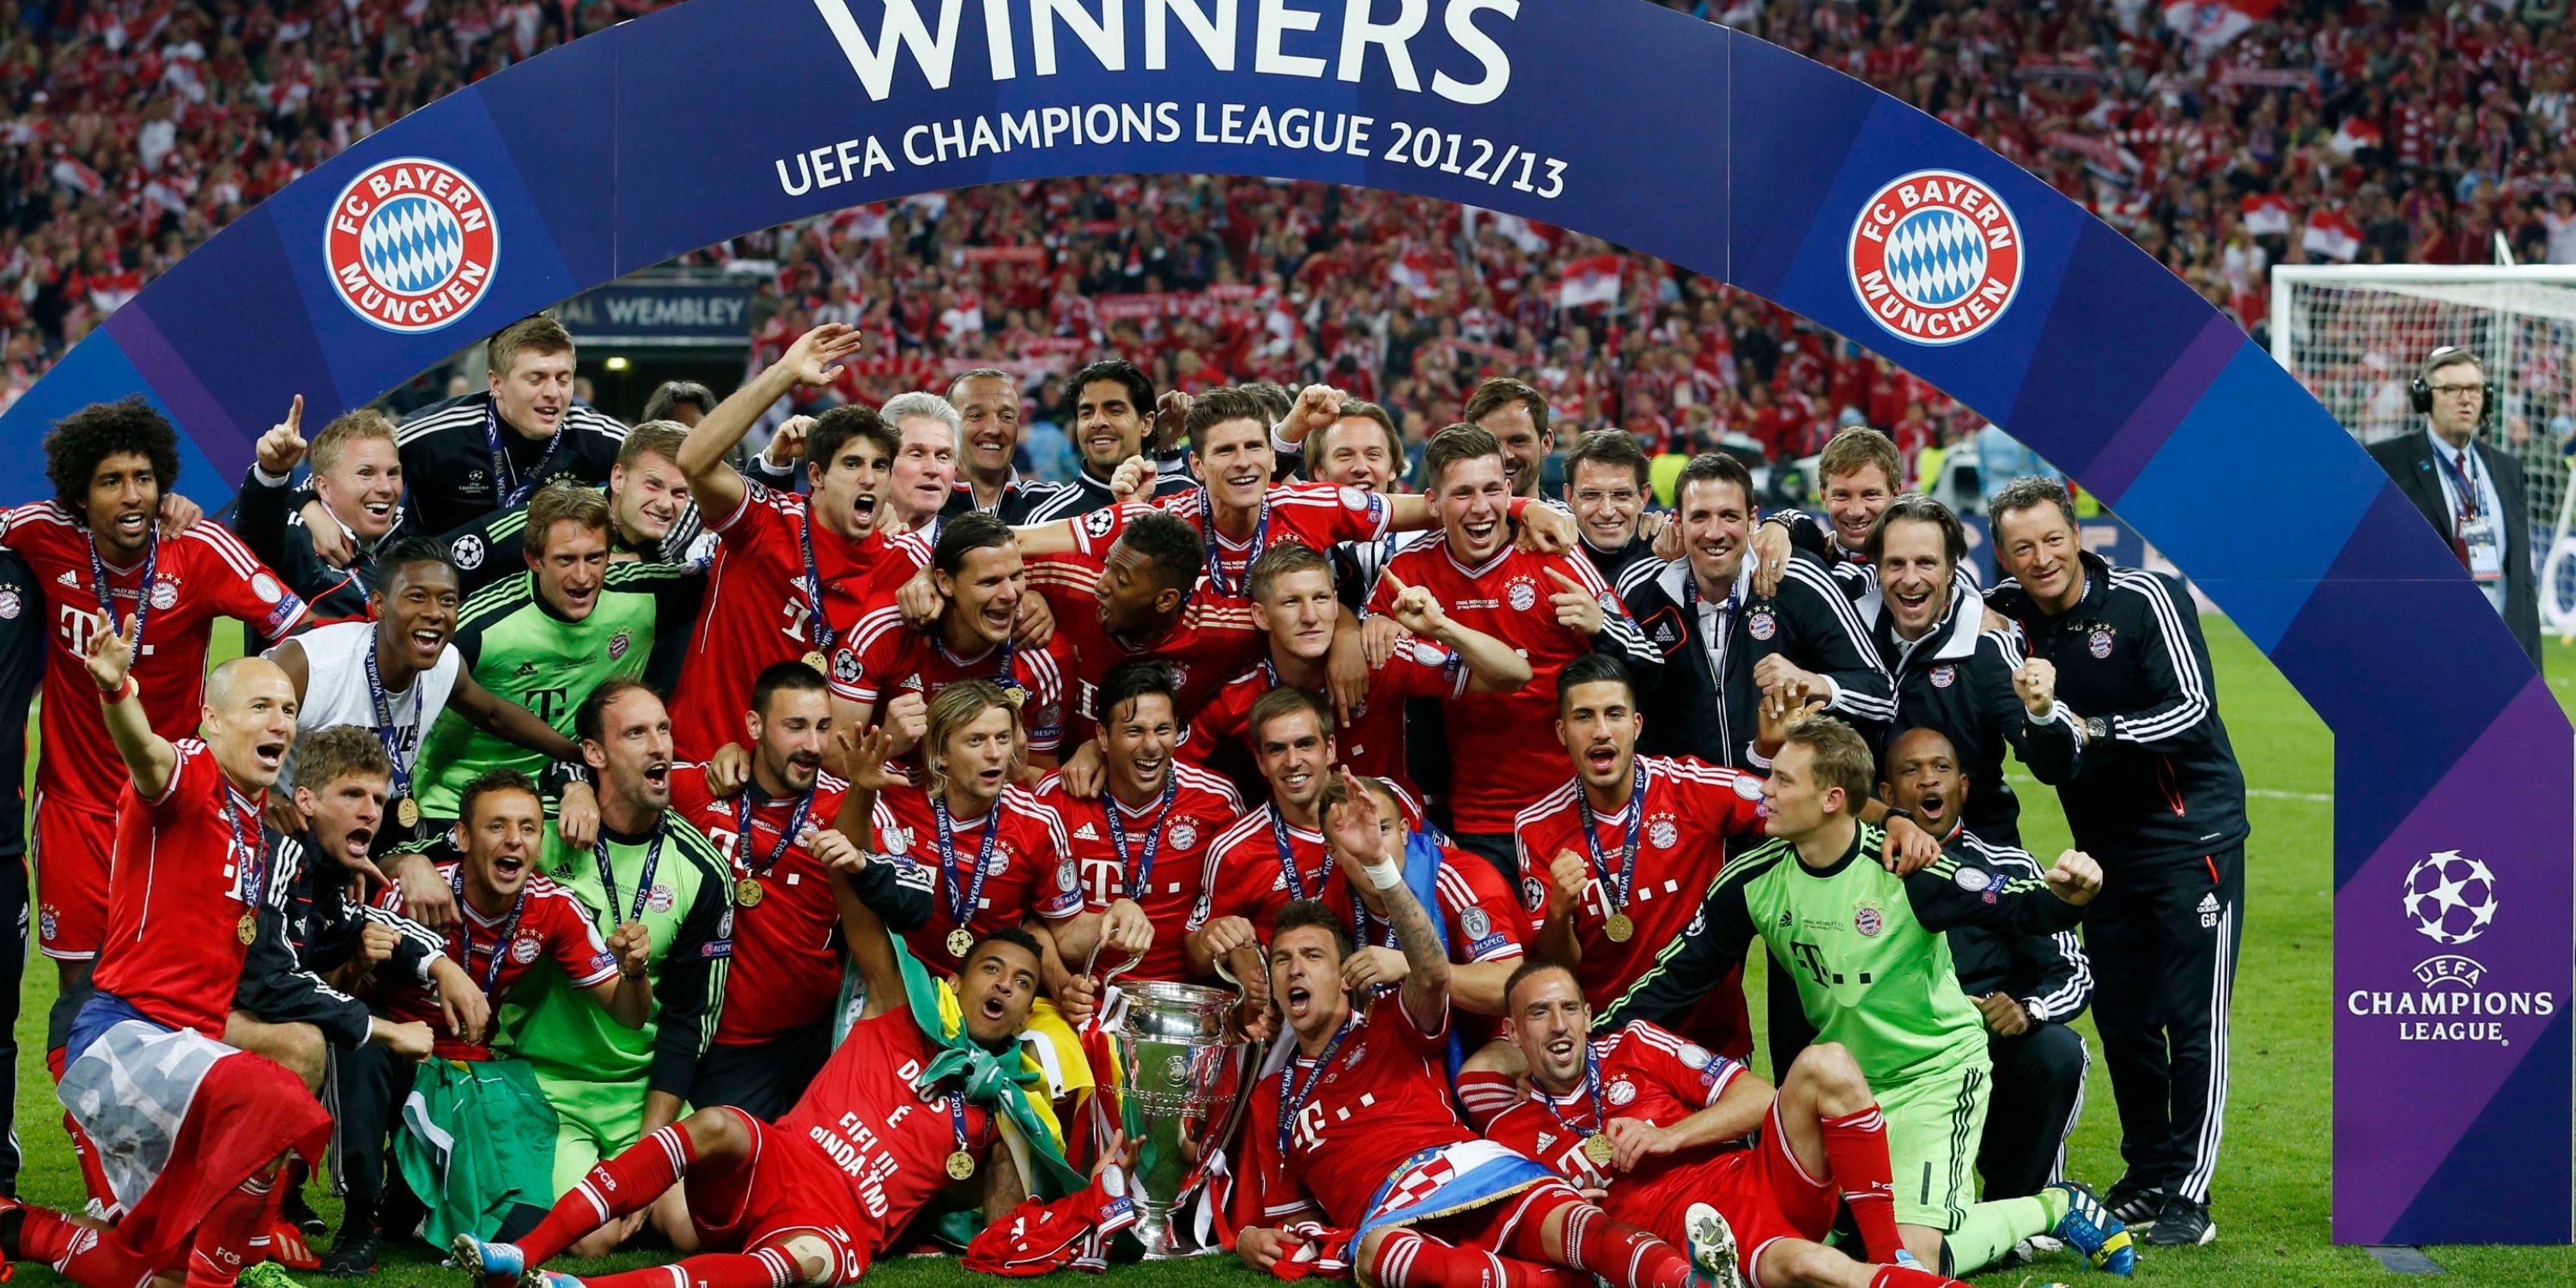 Bayern celebrate winning the UCL vs Dortmund